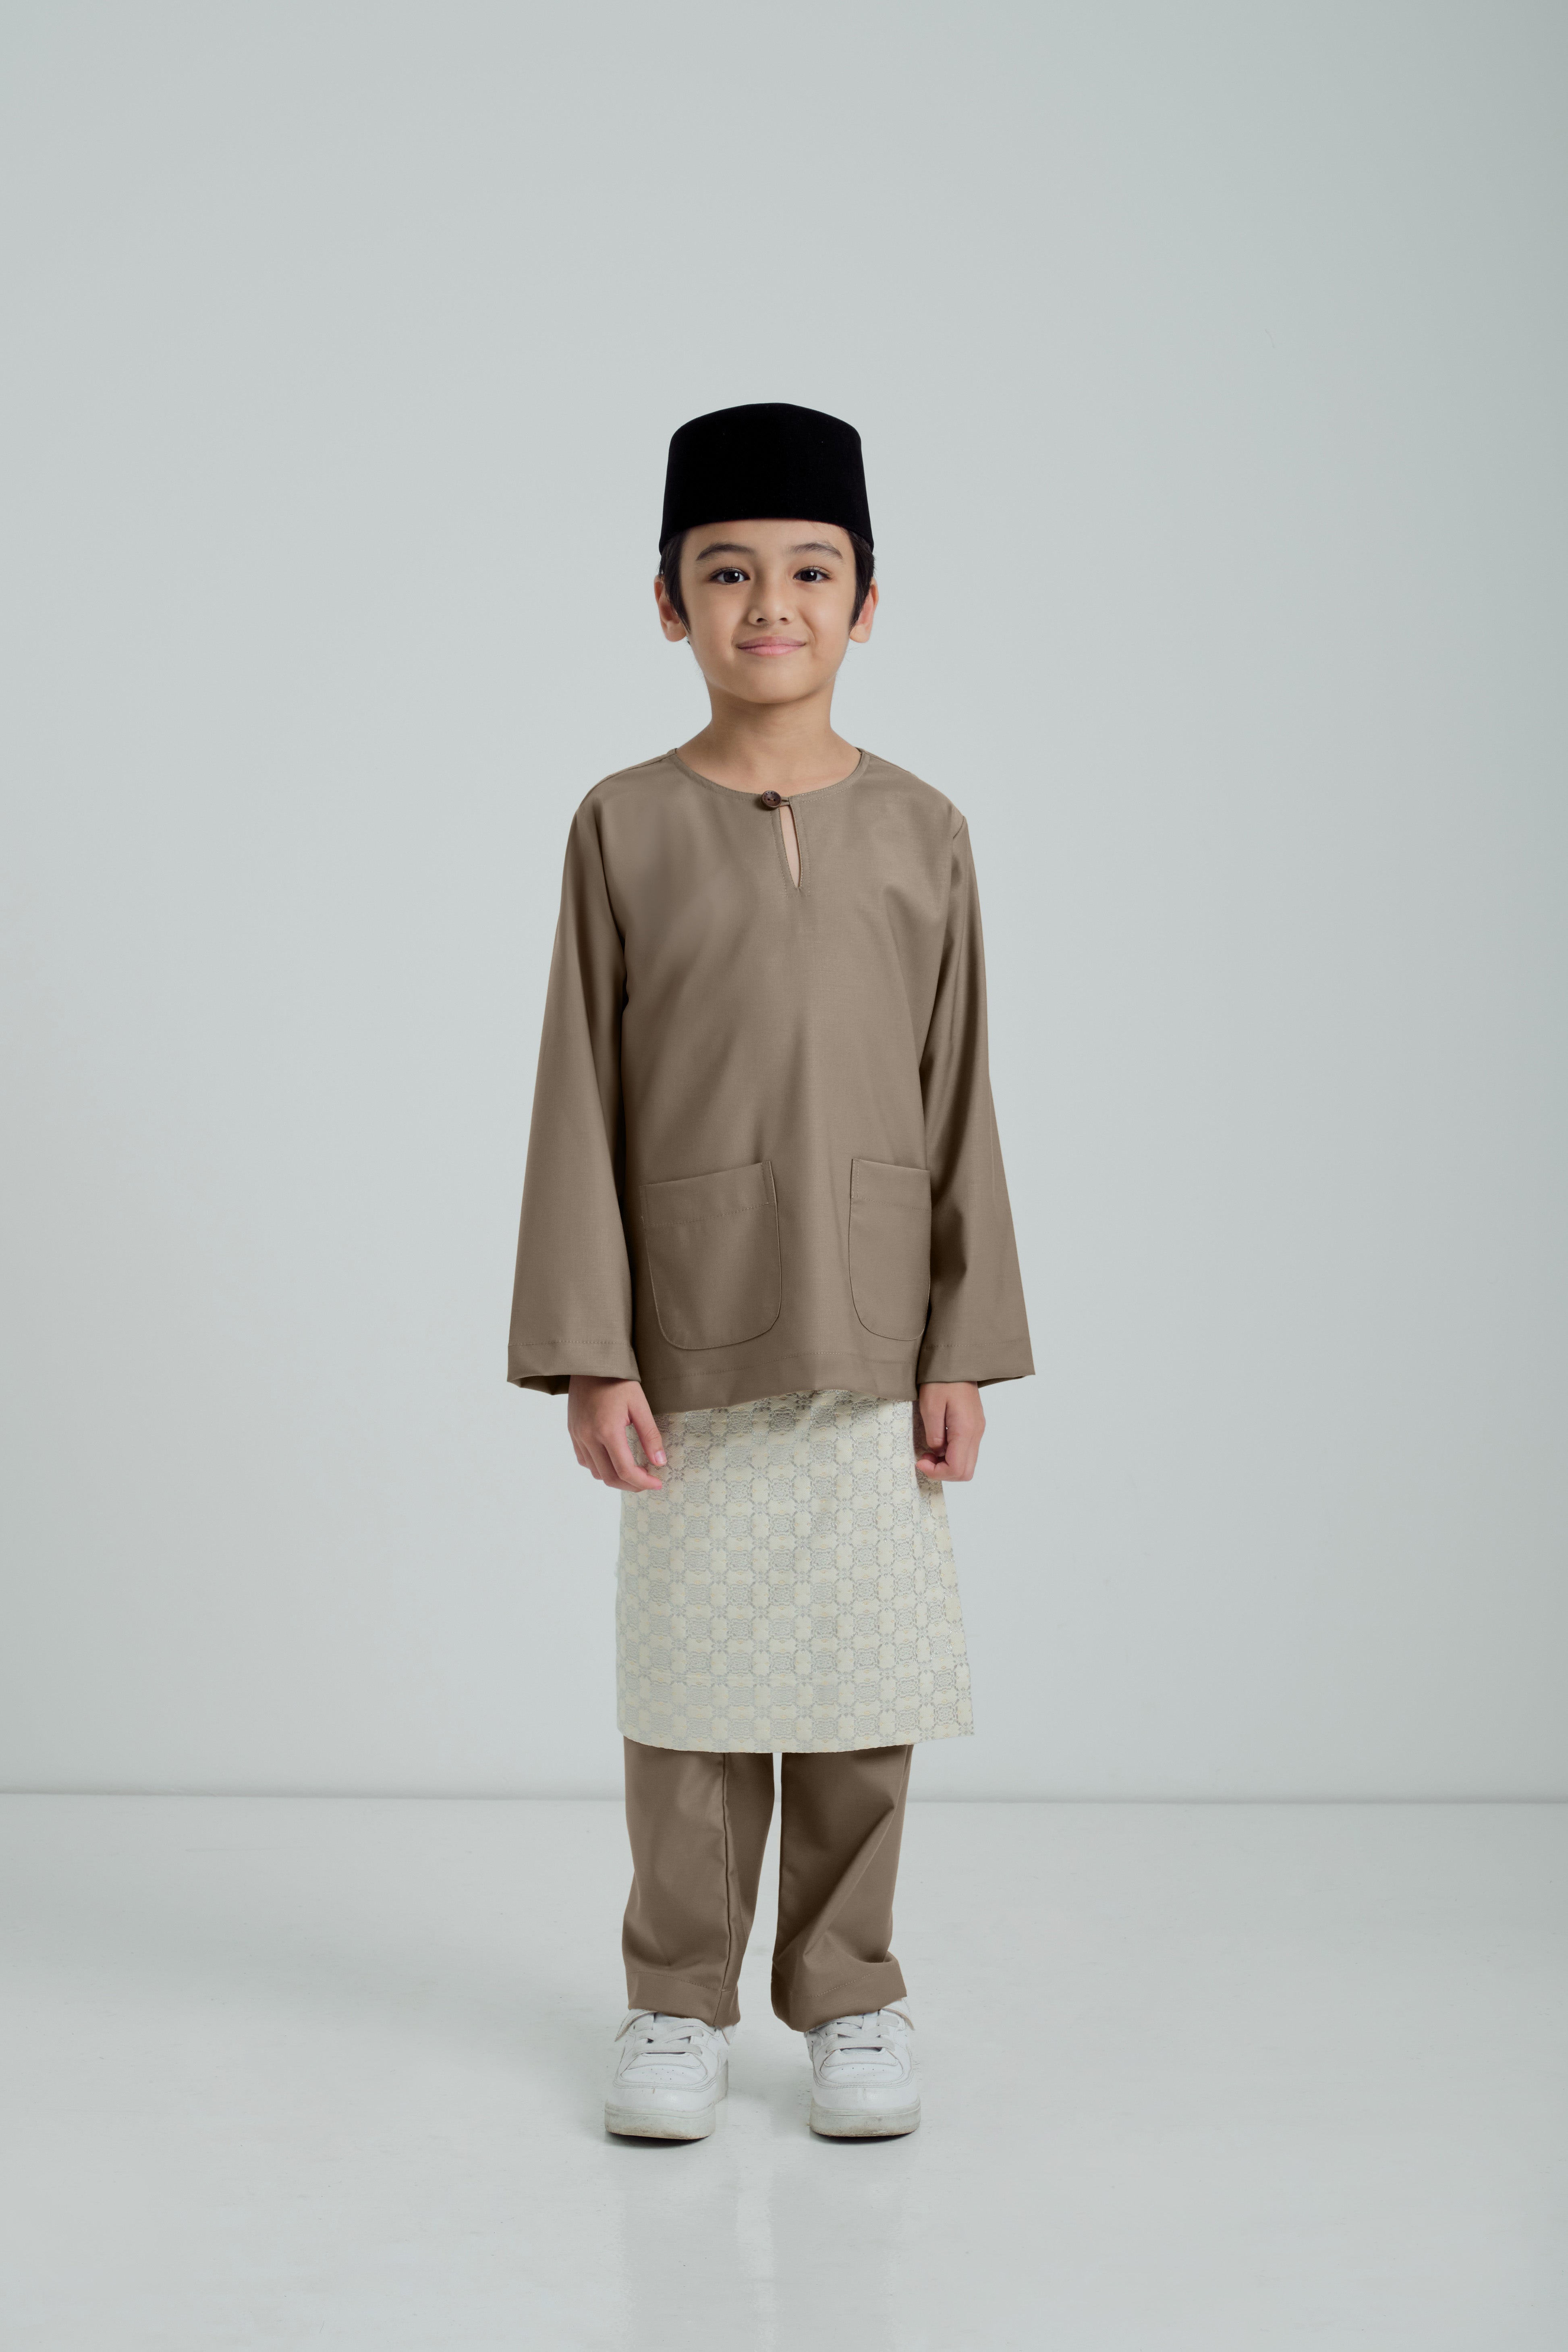 Patawali Boys Baju Melayu Teluk Belanga - Hazelnut